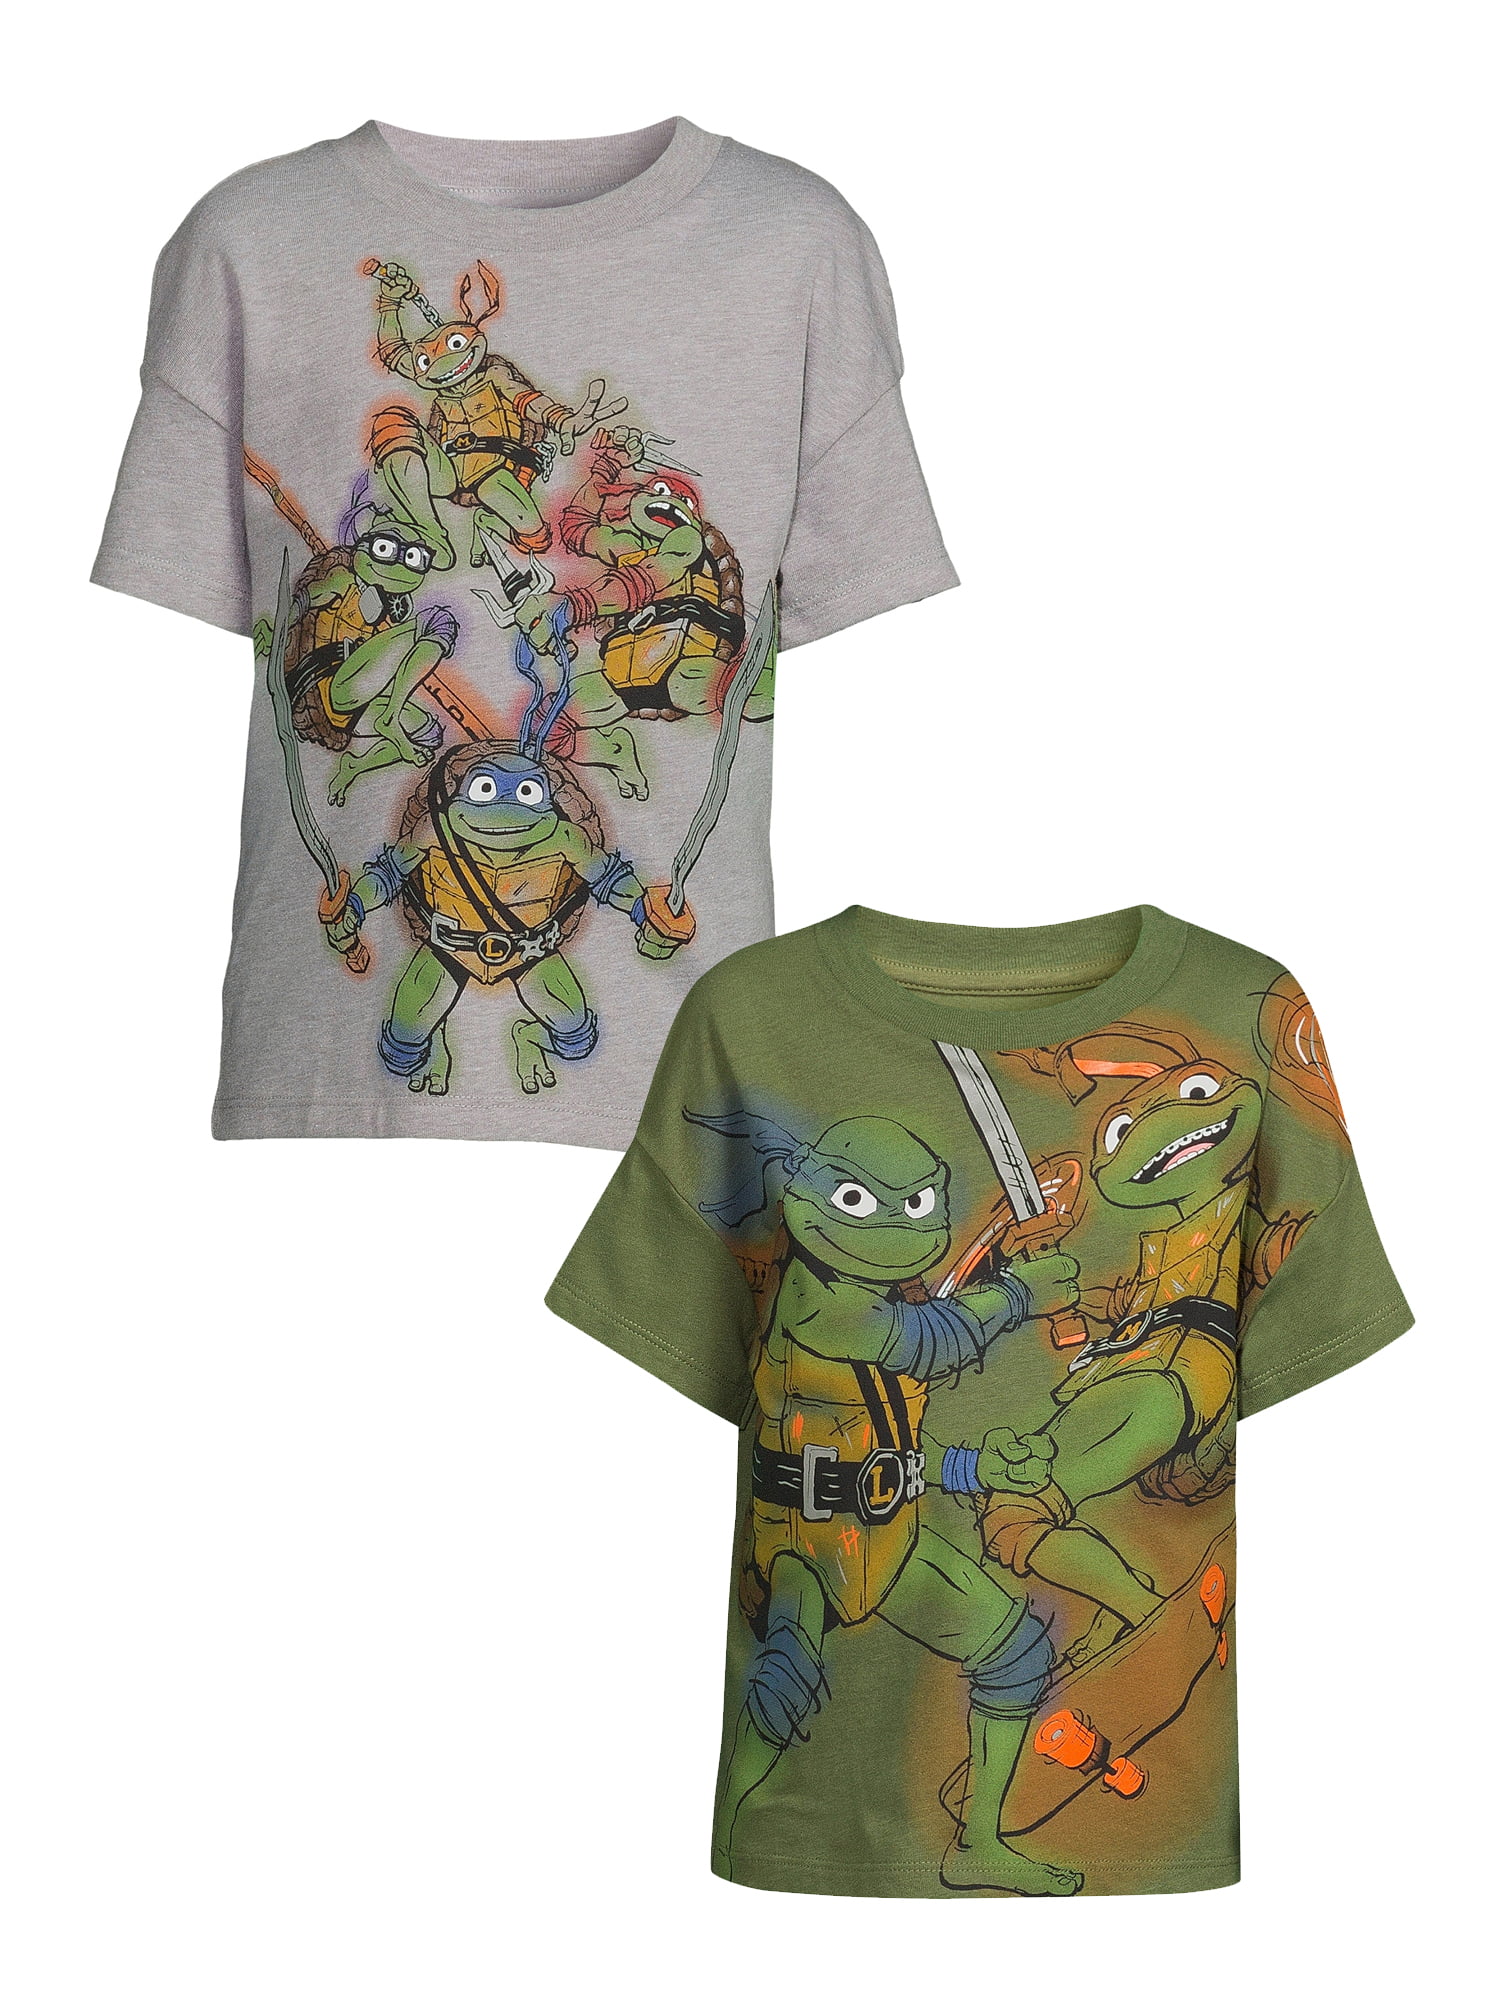 Teenage Mutant Ninja Turtles Boys Turtle Rebels Black Short Sleeved T Shirt  - teejeep